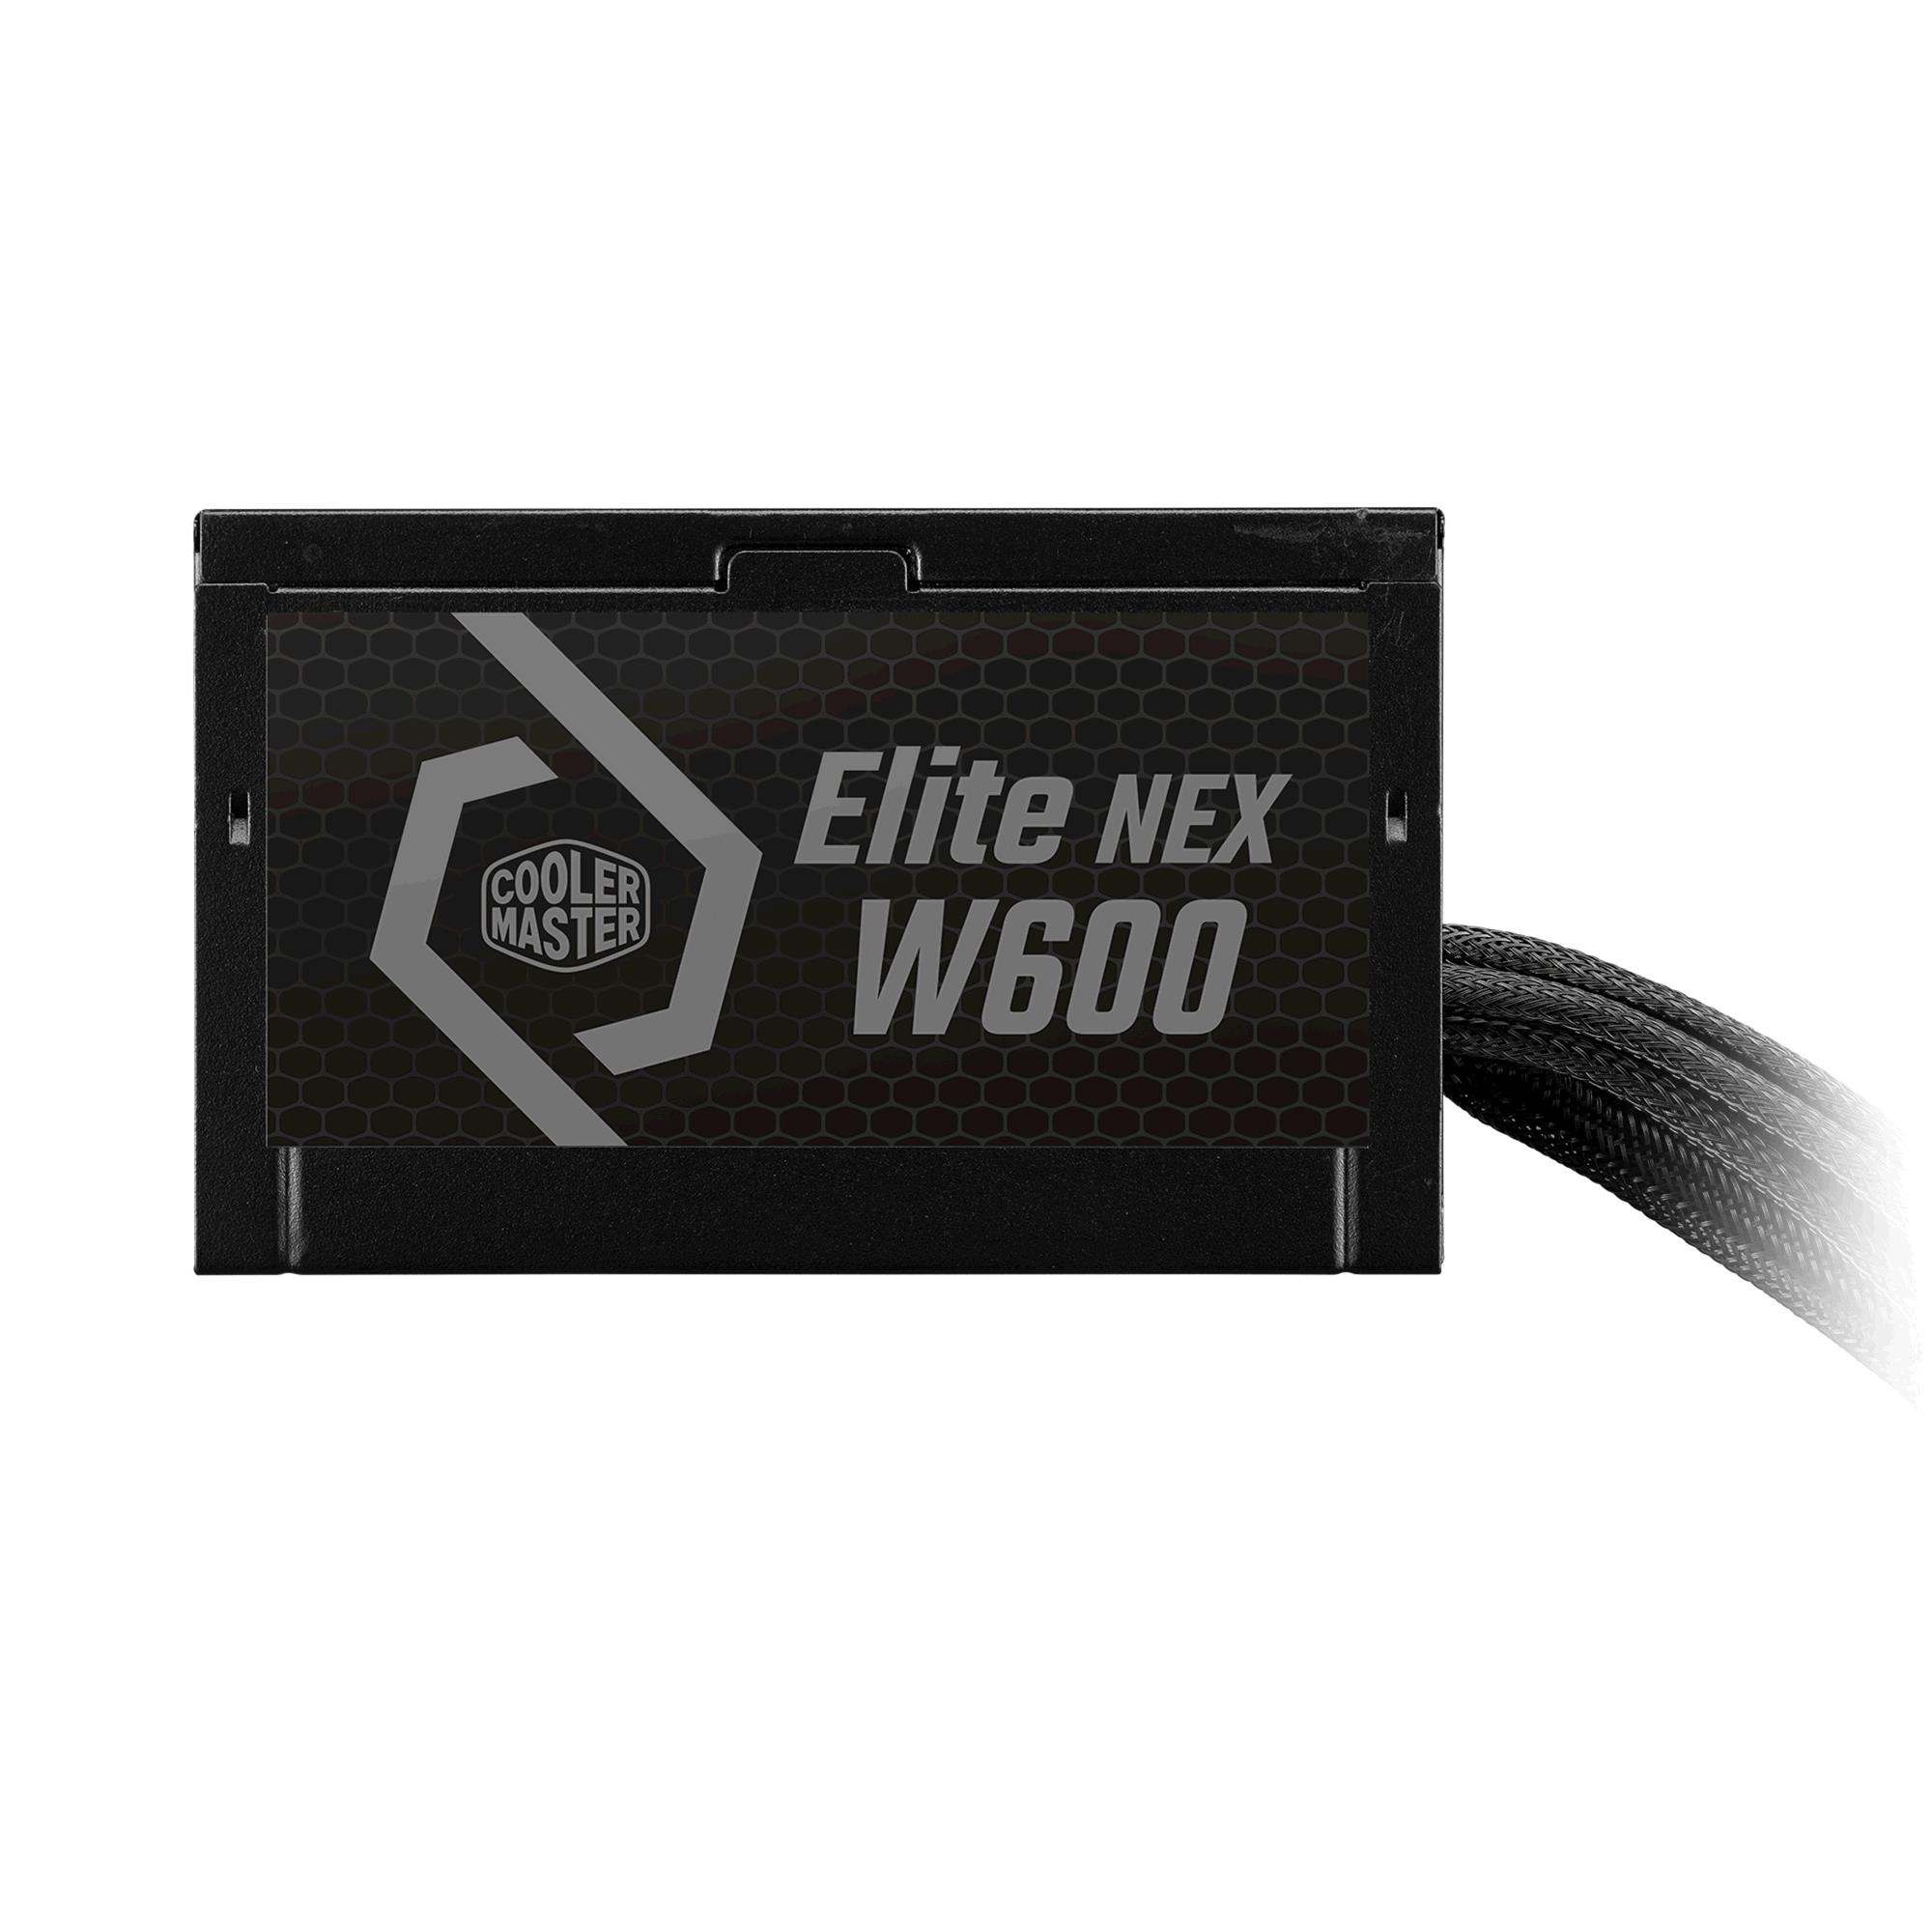 Cooler Master Elite Nex W600 Black